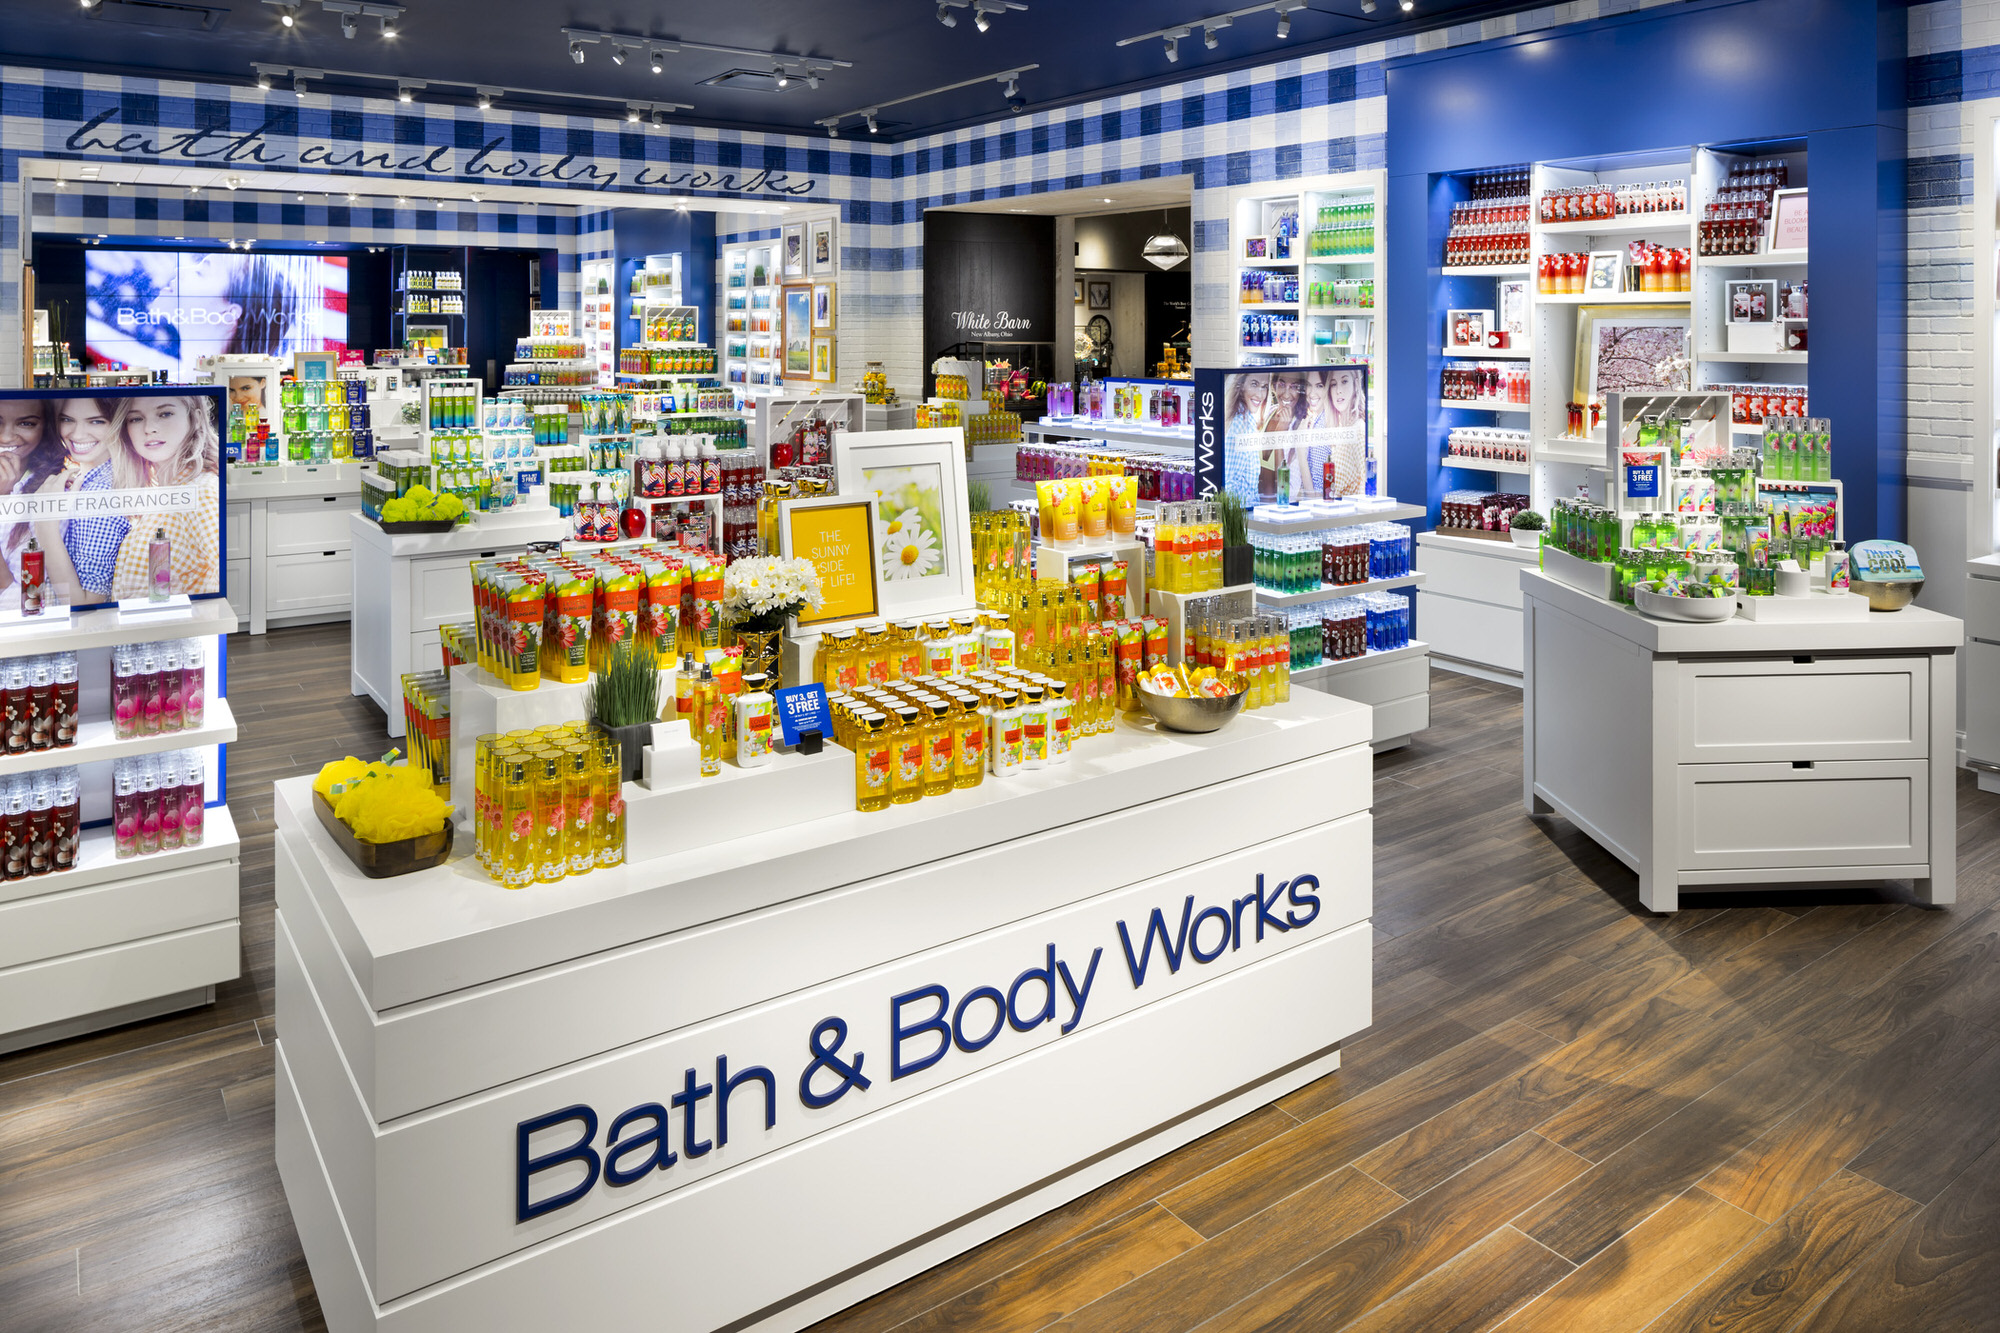 Galleria Dallas | Bath & Body Works